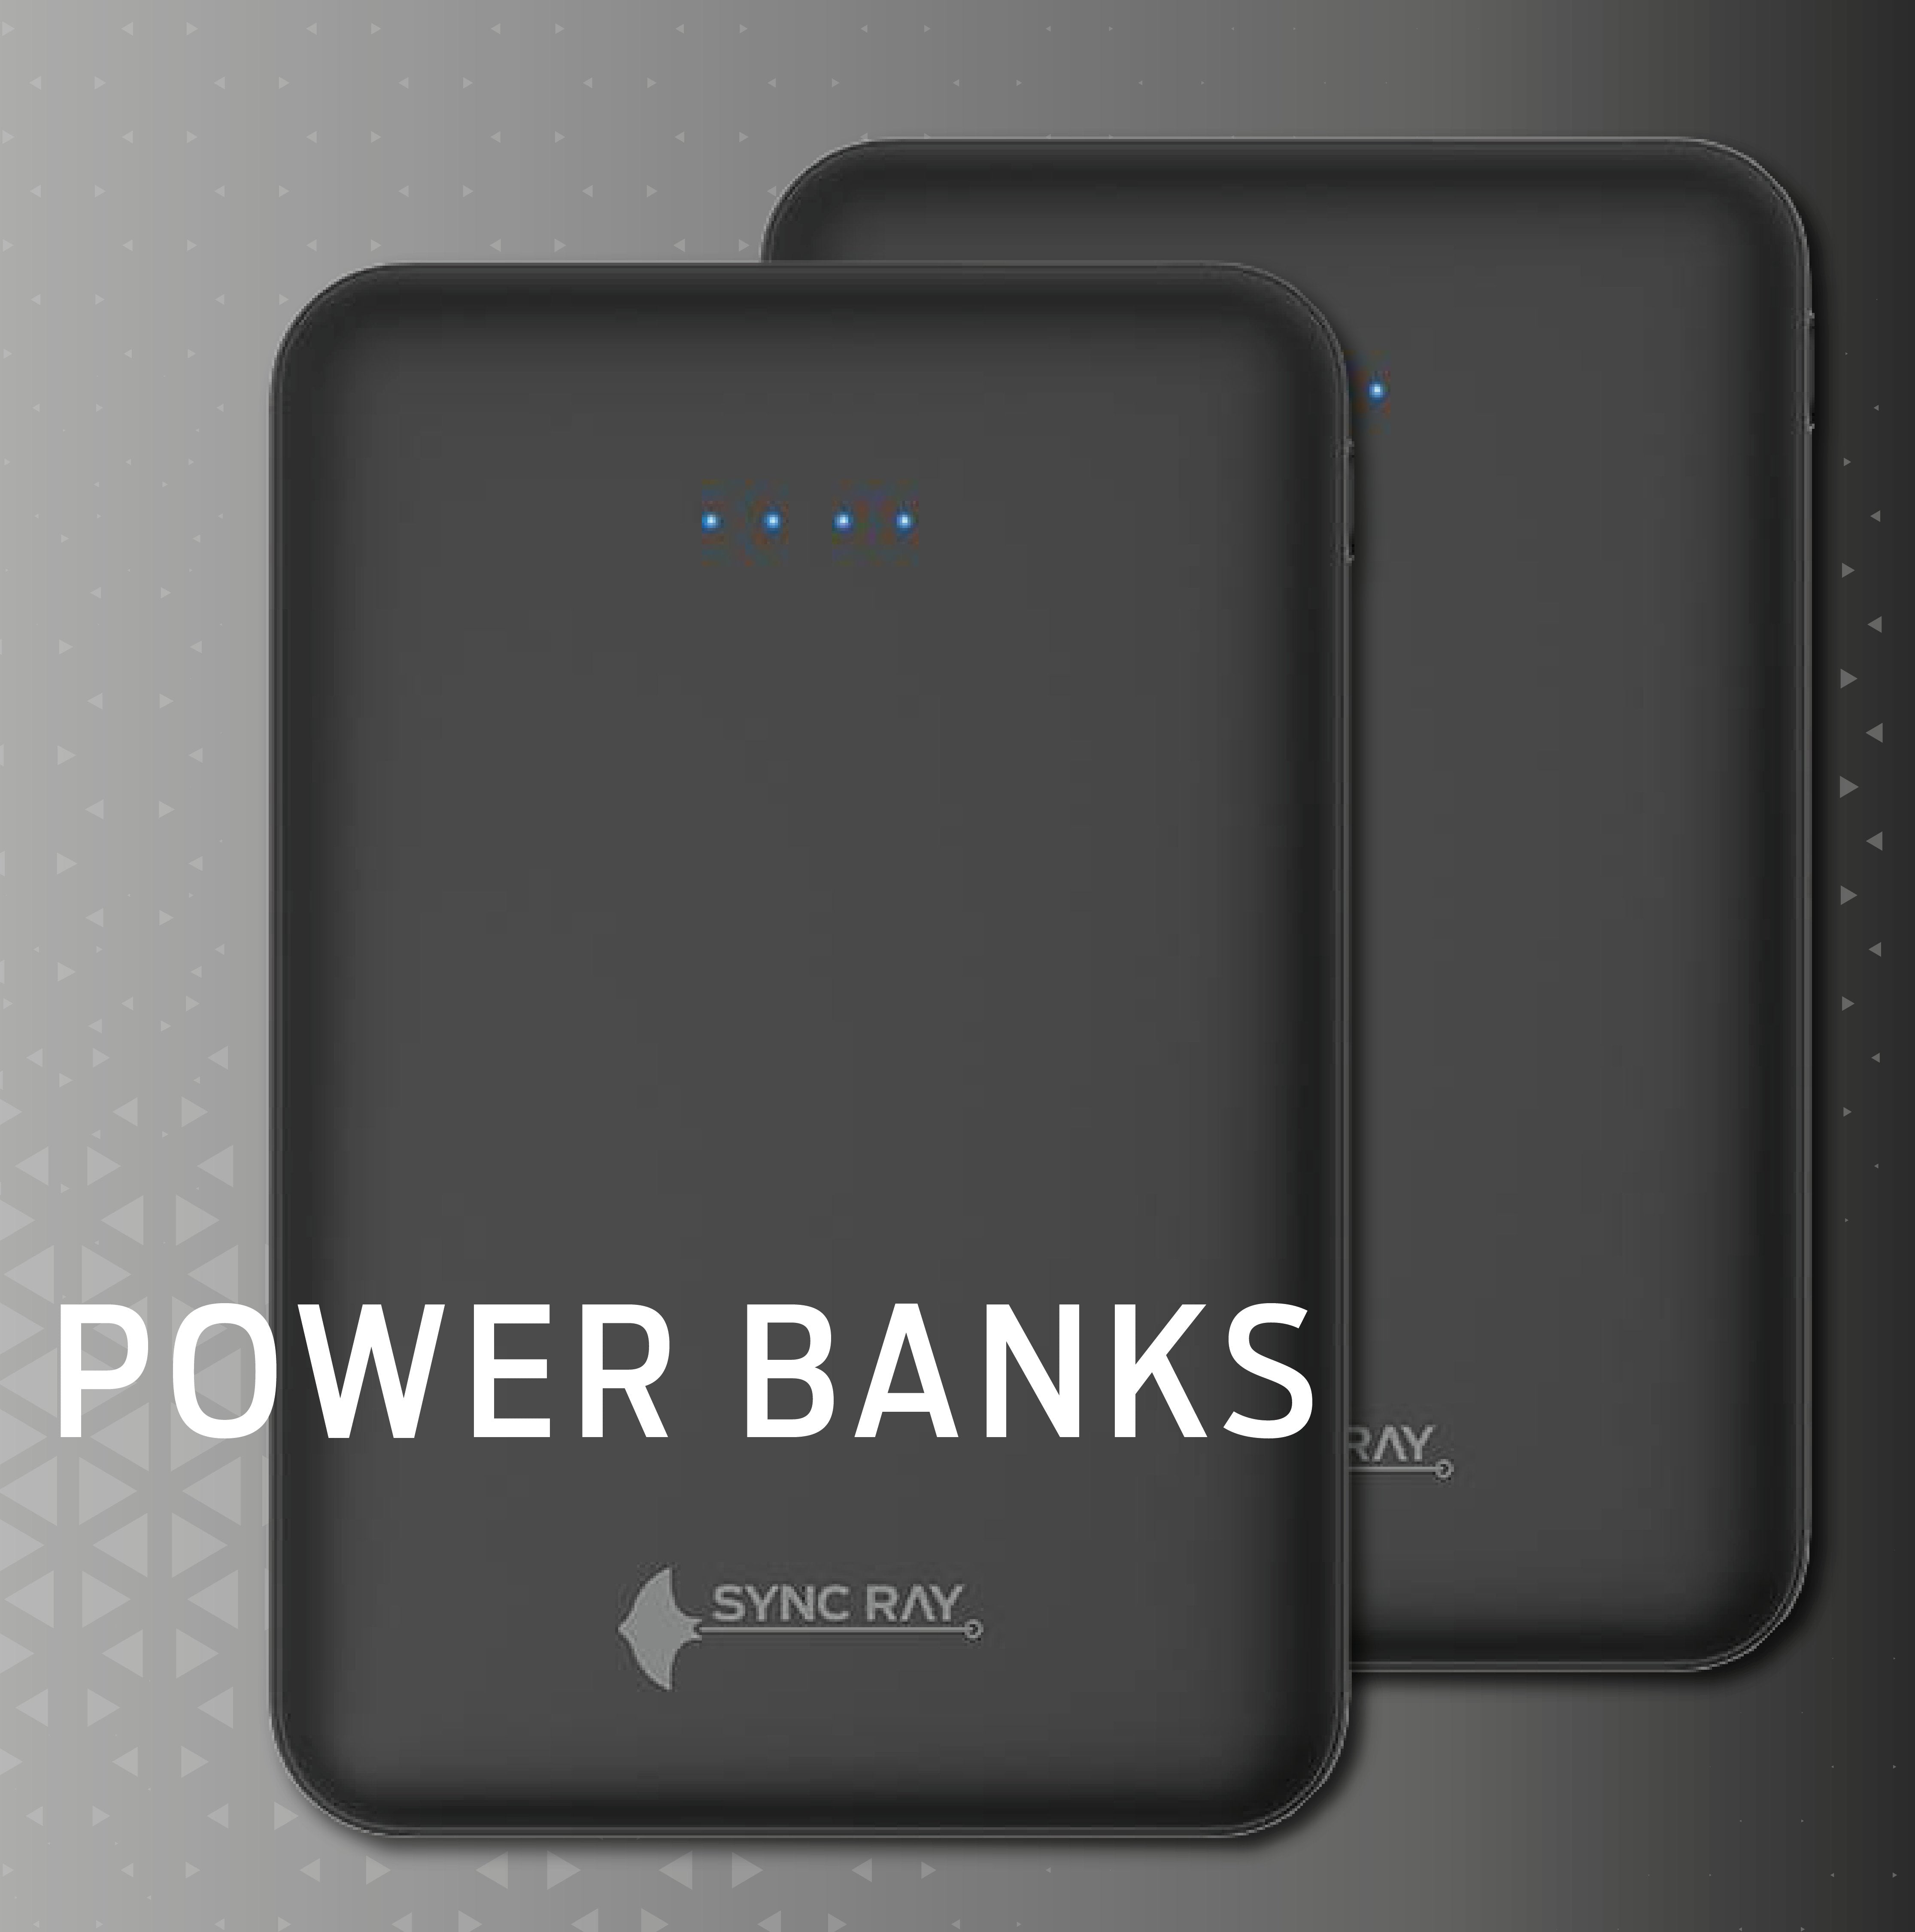 POWER BANKS